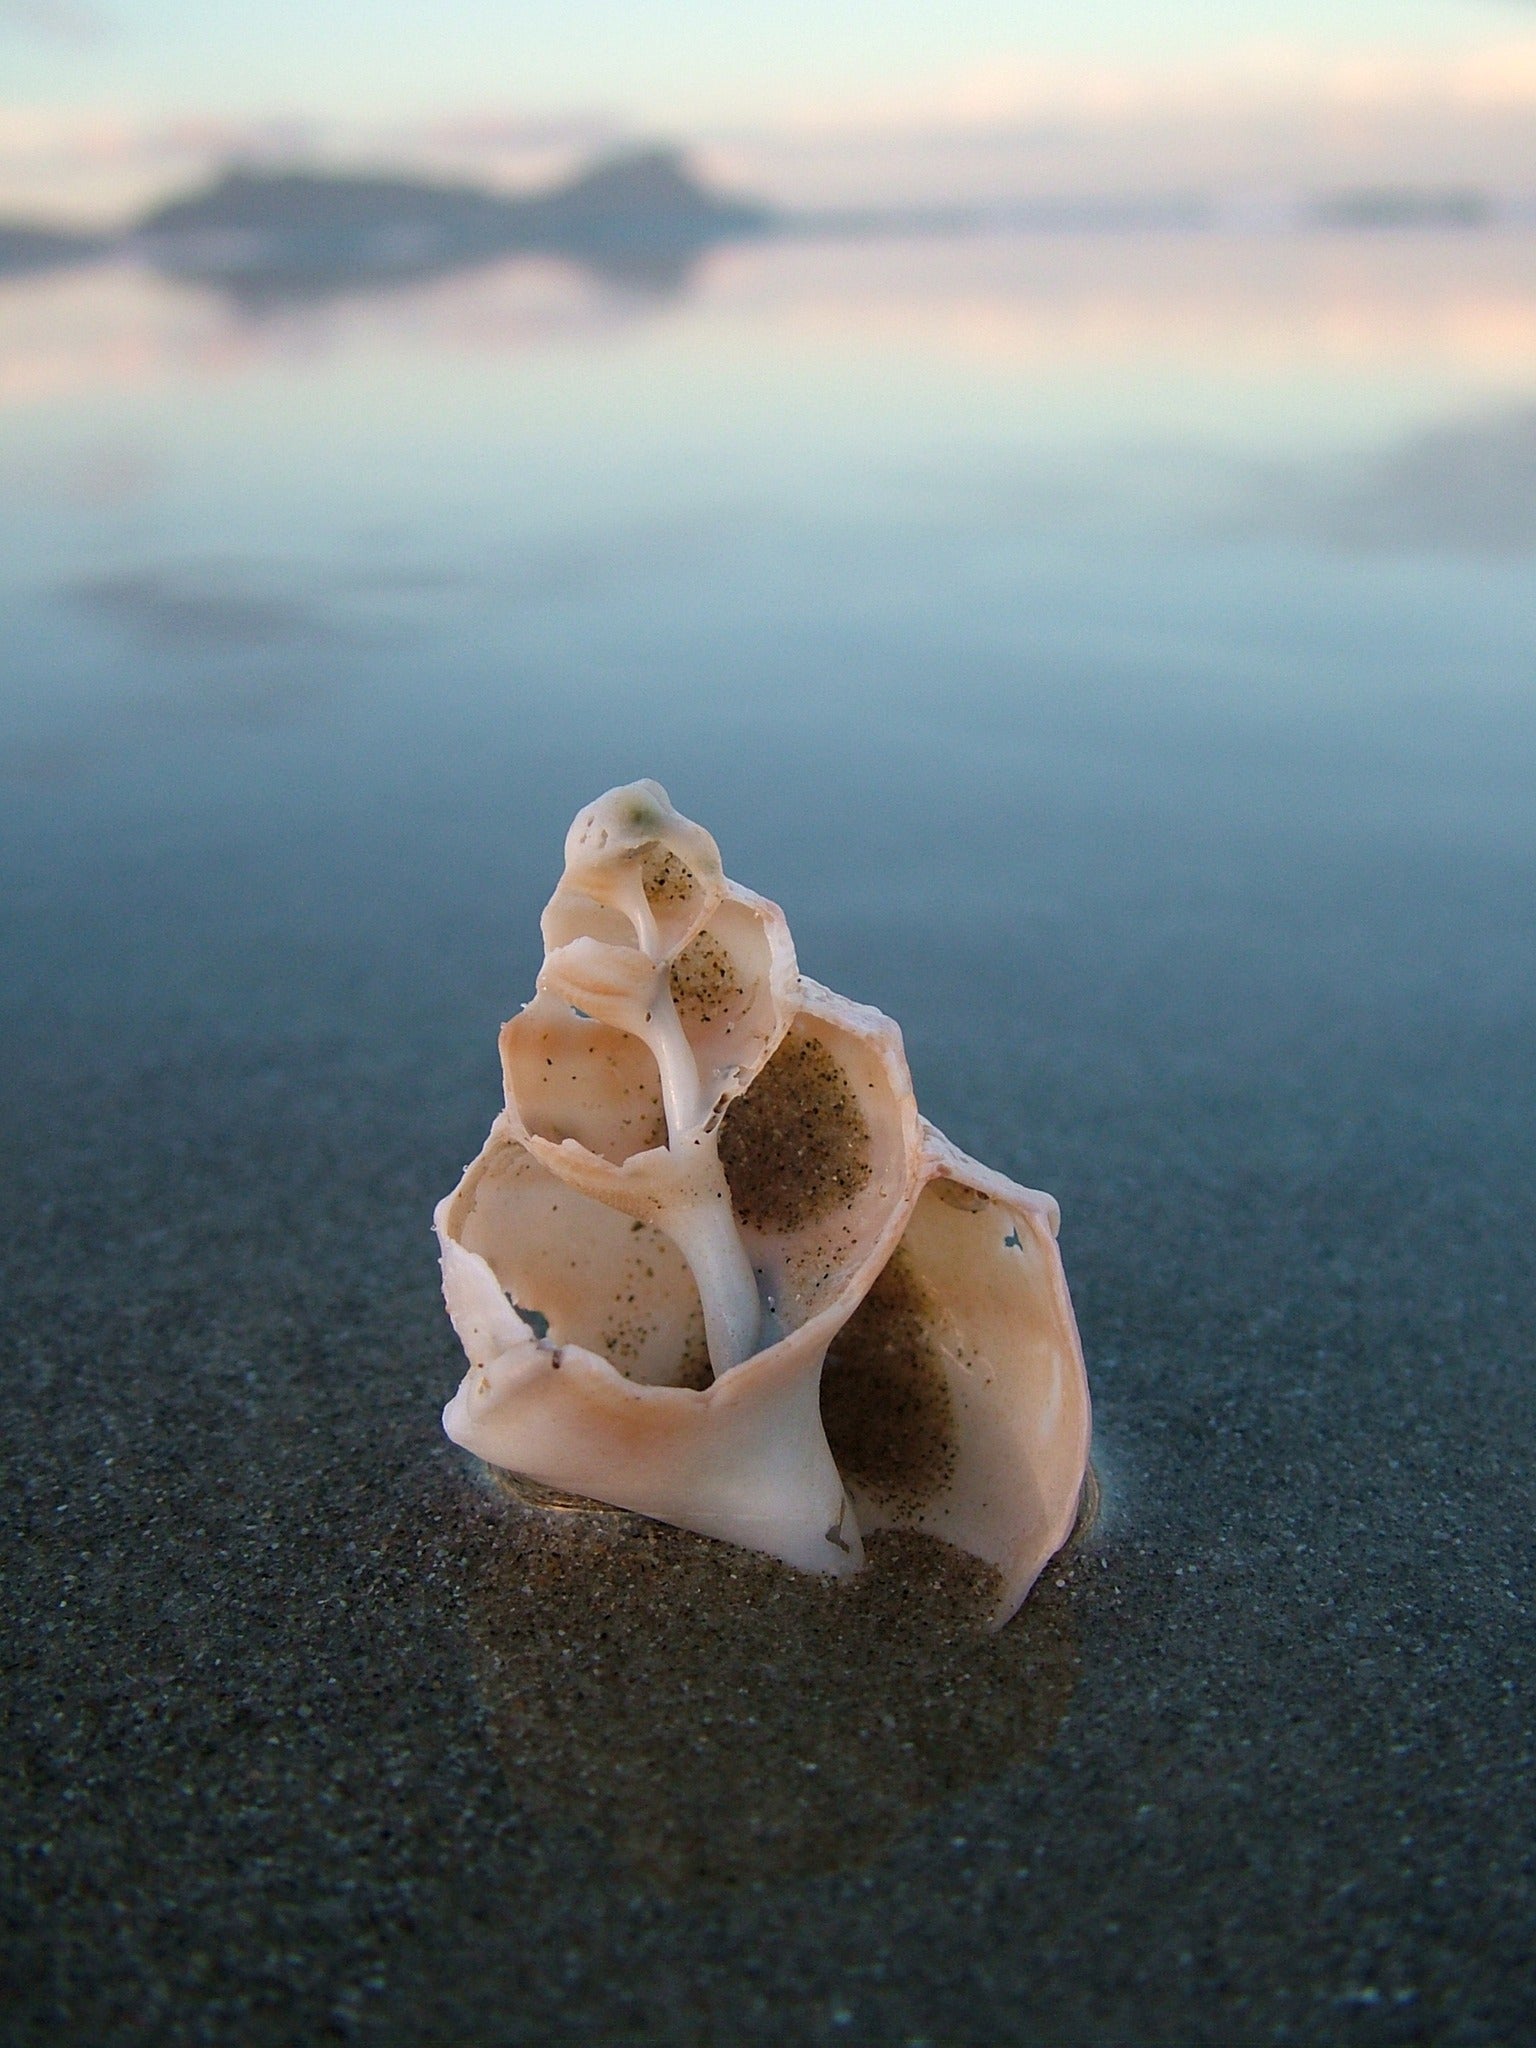 seashell buried in sand